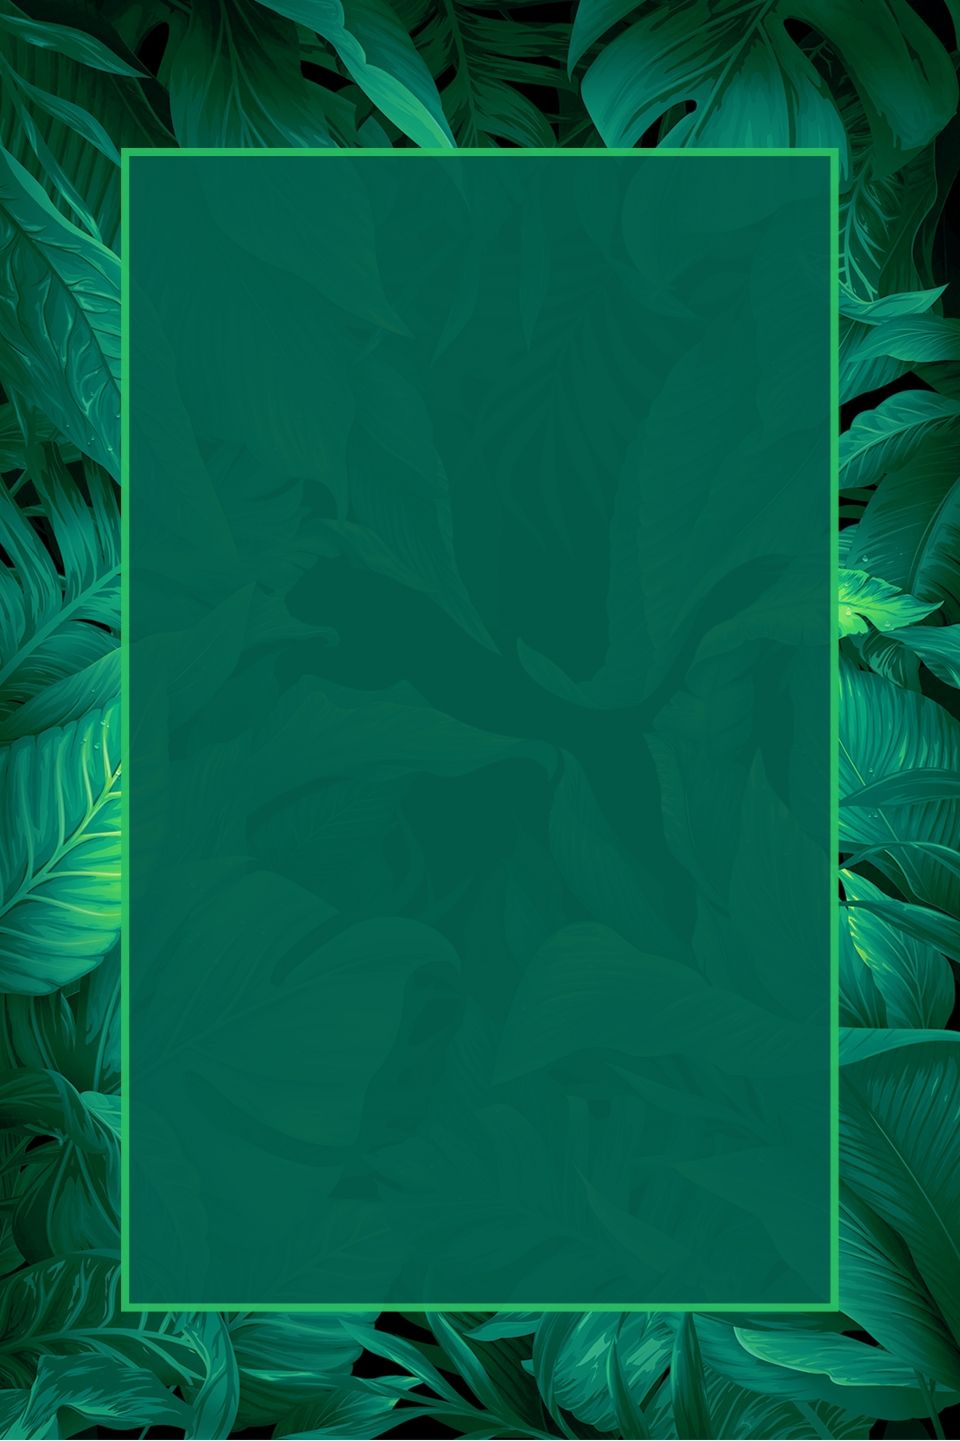 Green Leaf Poster Background And Black